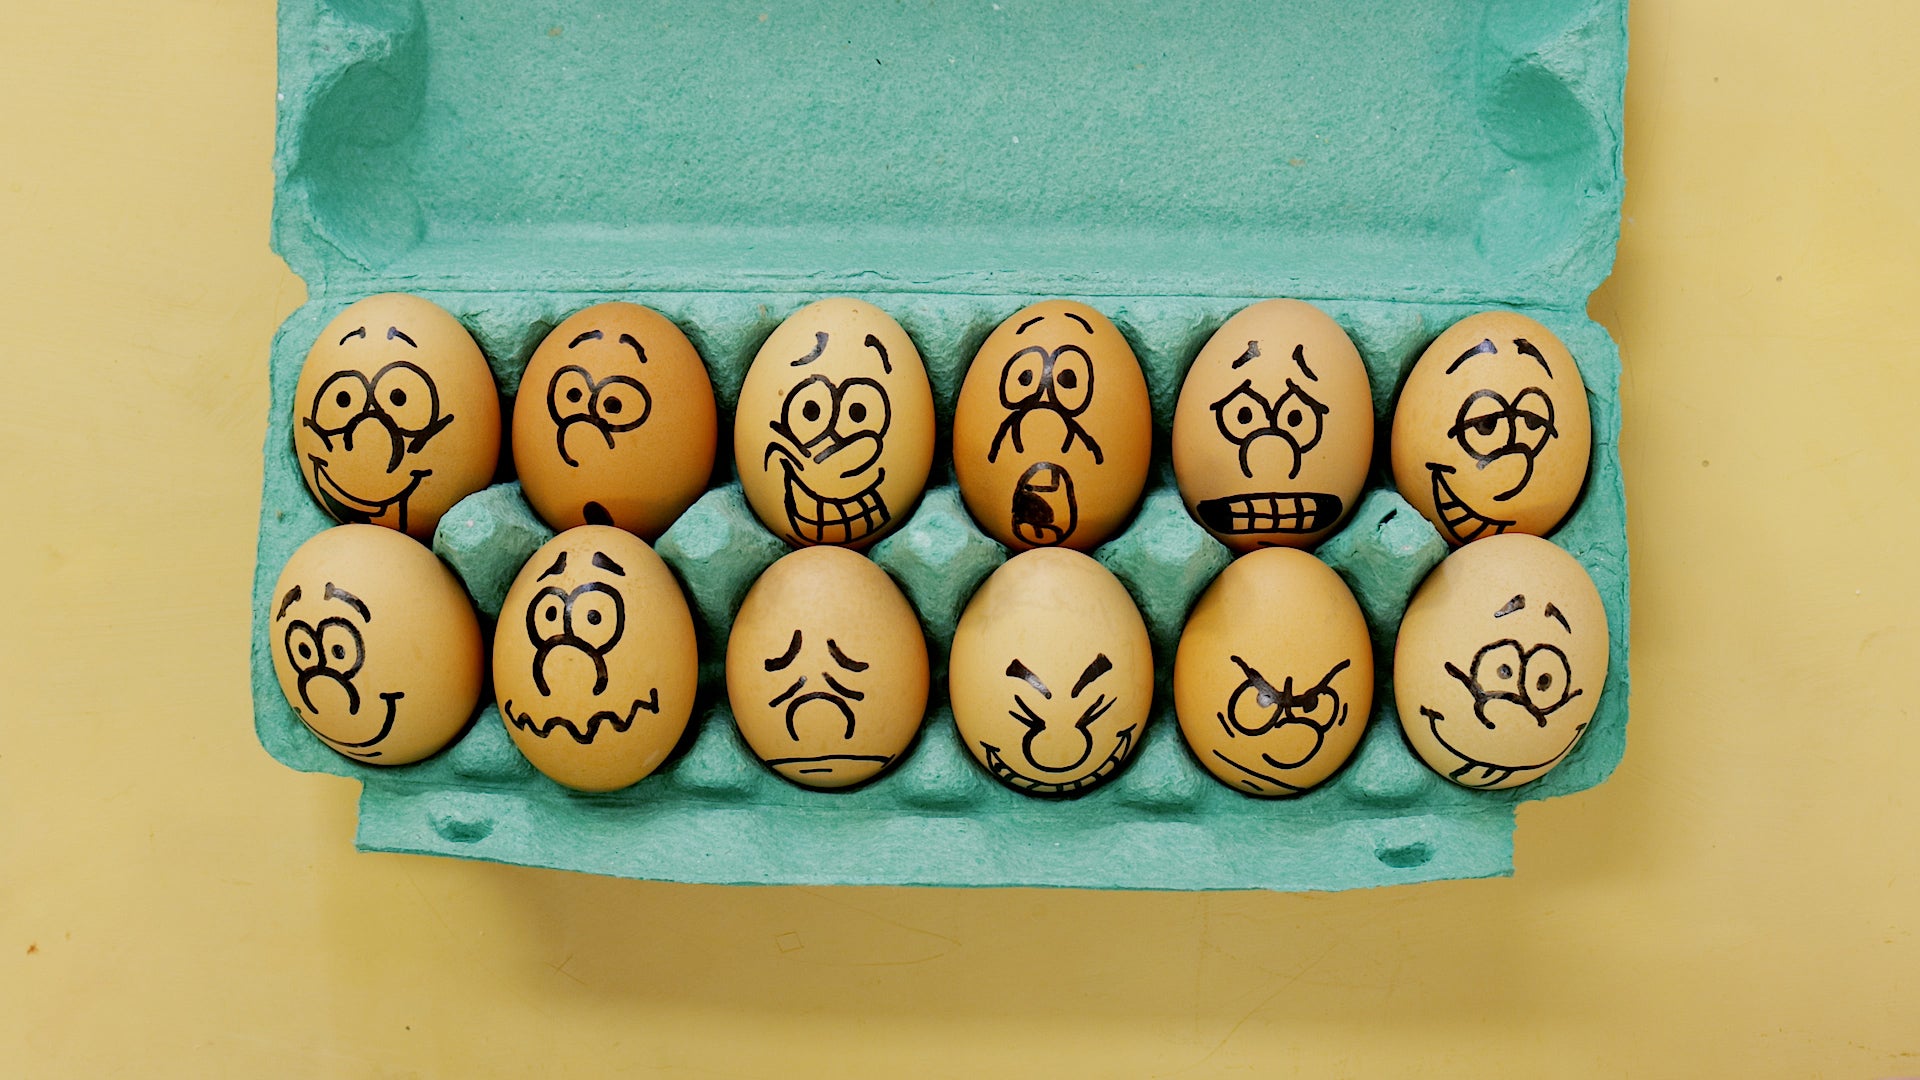 A green egg carton with funny faces drawn on each egg.